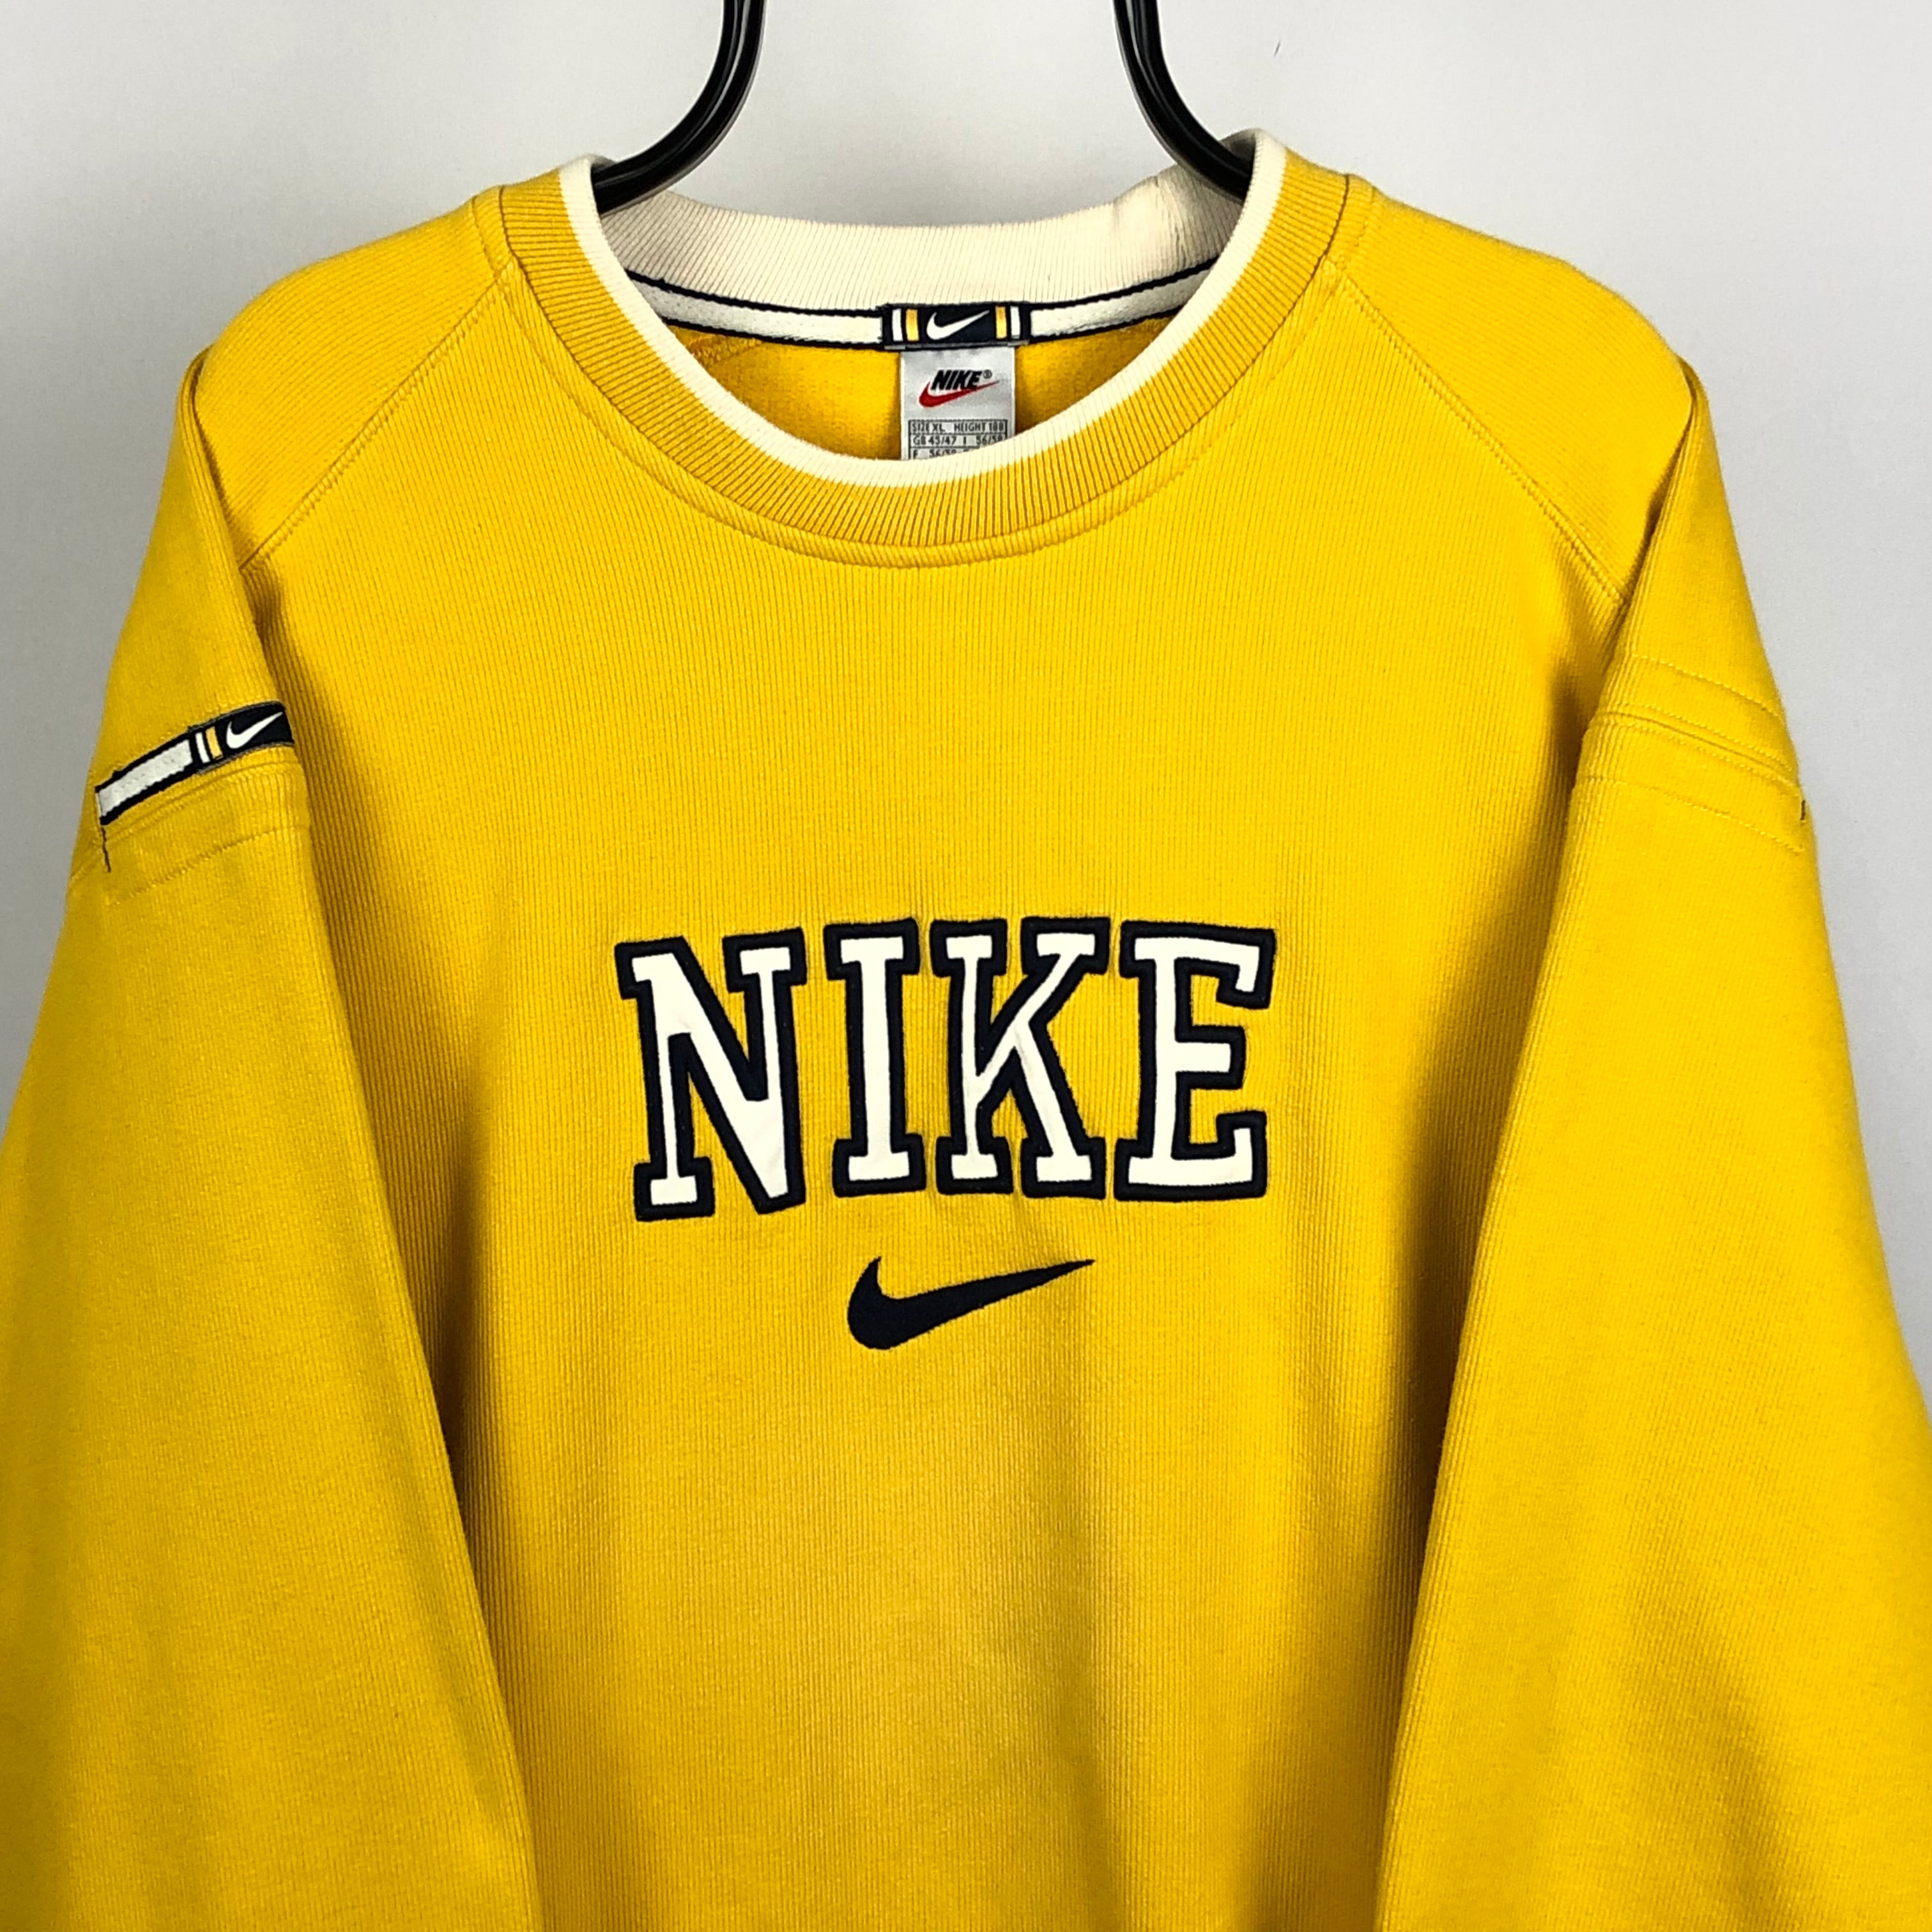 Vintage 90s Nike Spellout Sweatshirt in Mustard Yellow - Men's XL/Wome ...